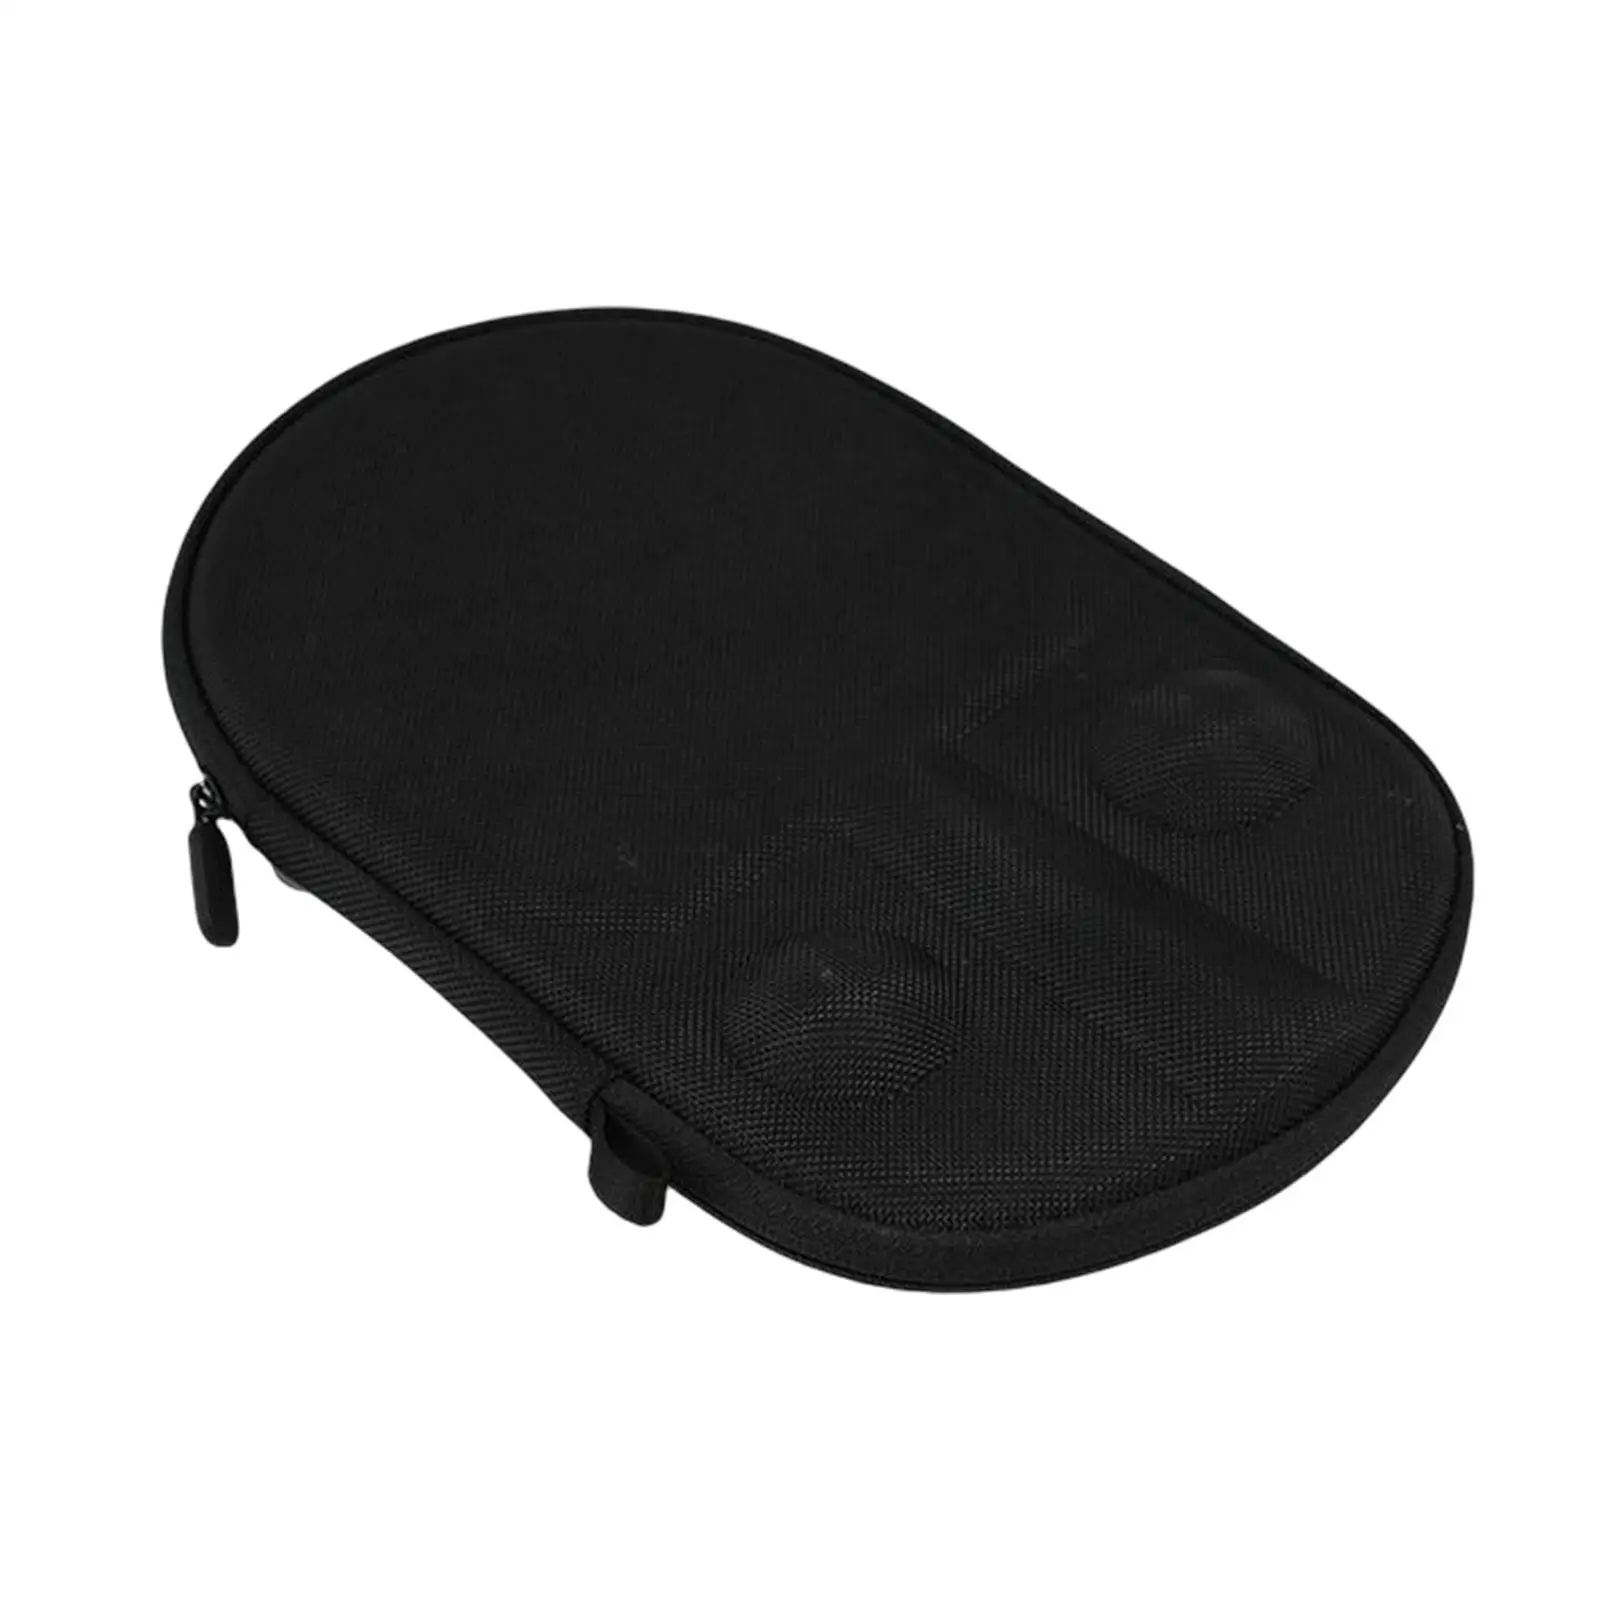 Multifunction Table Tennis Racket Bag with Zipper Lightweight for Indoor